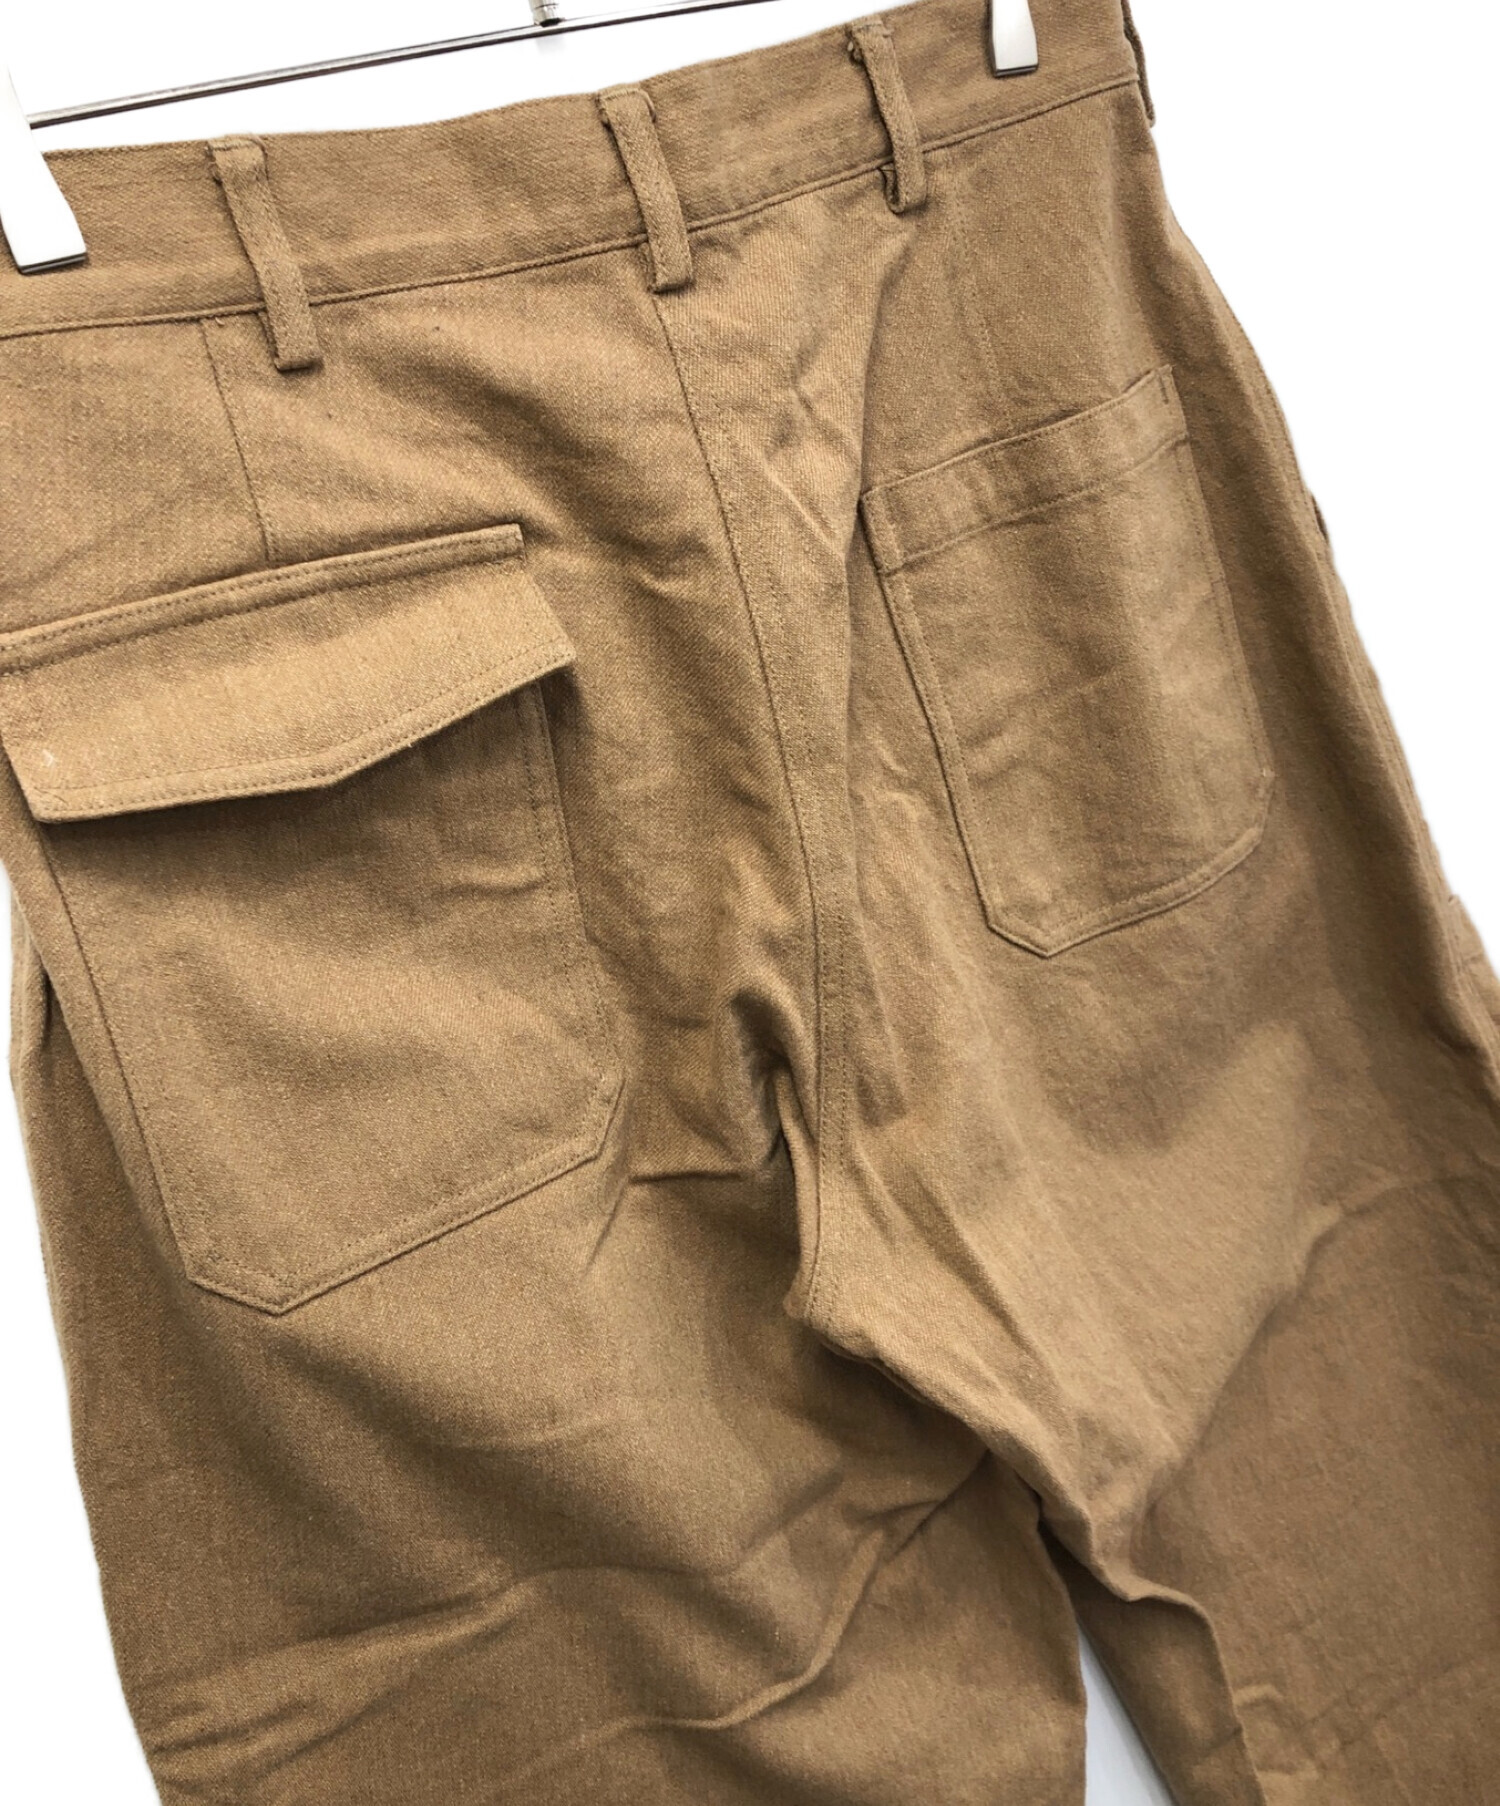 STANDARD JOURNAL (スタンダード ジャーナル) Daishi Nishino Military Pants ブラウン サイズ:W34